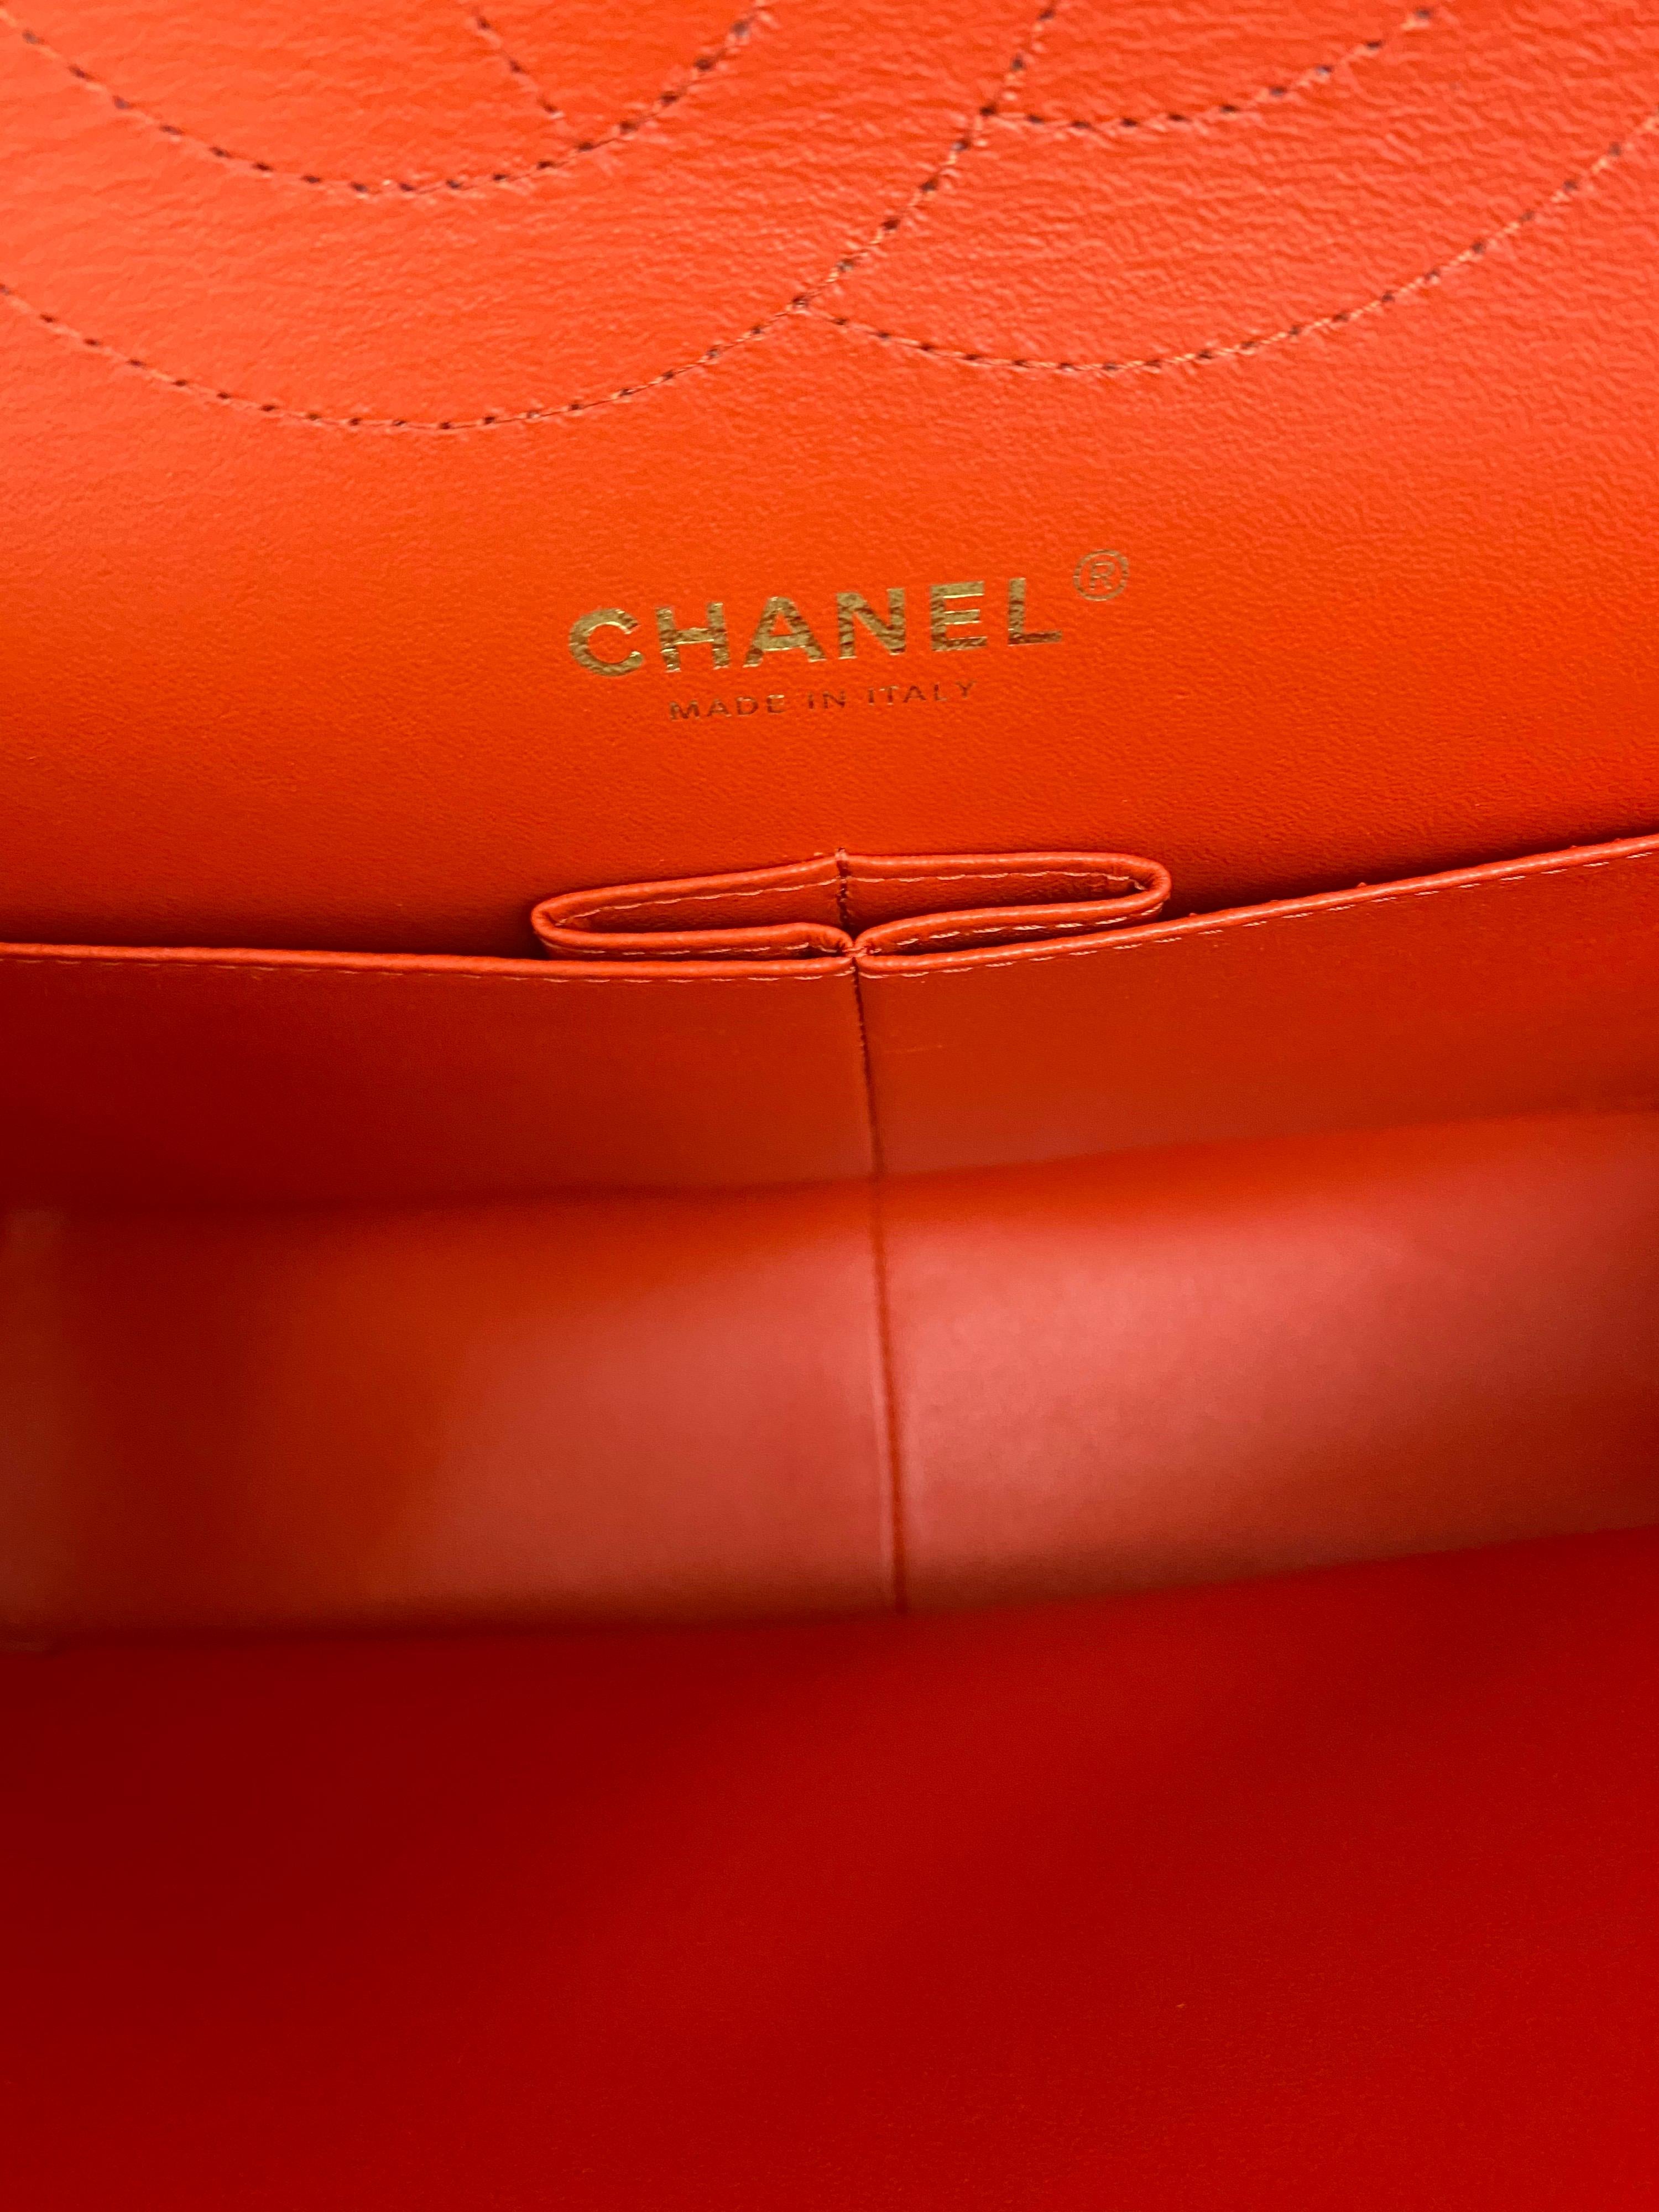 2019 Chanel Red Leather Maxi Jumbo Bag 6